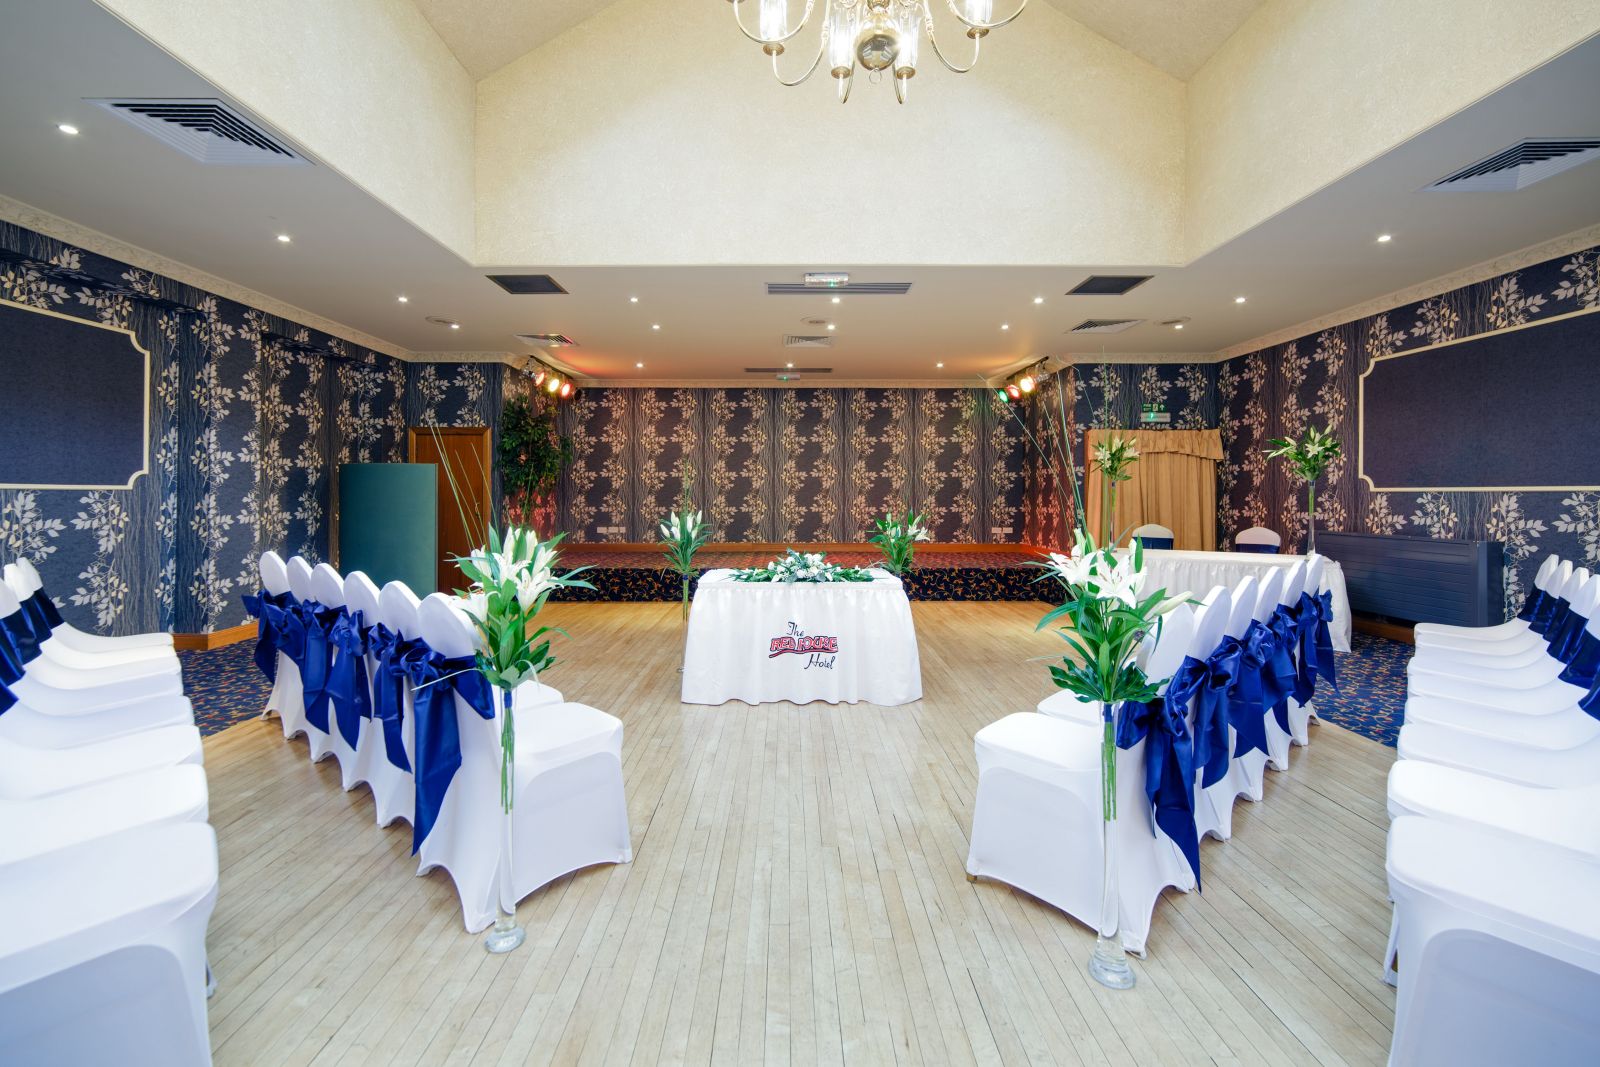 Wedding Image 2 - tables in V